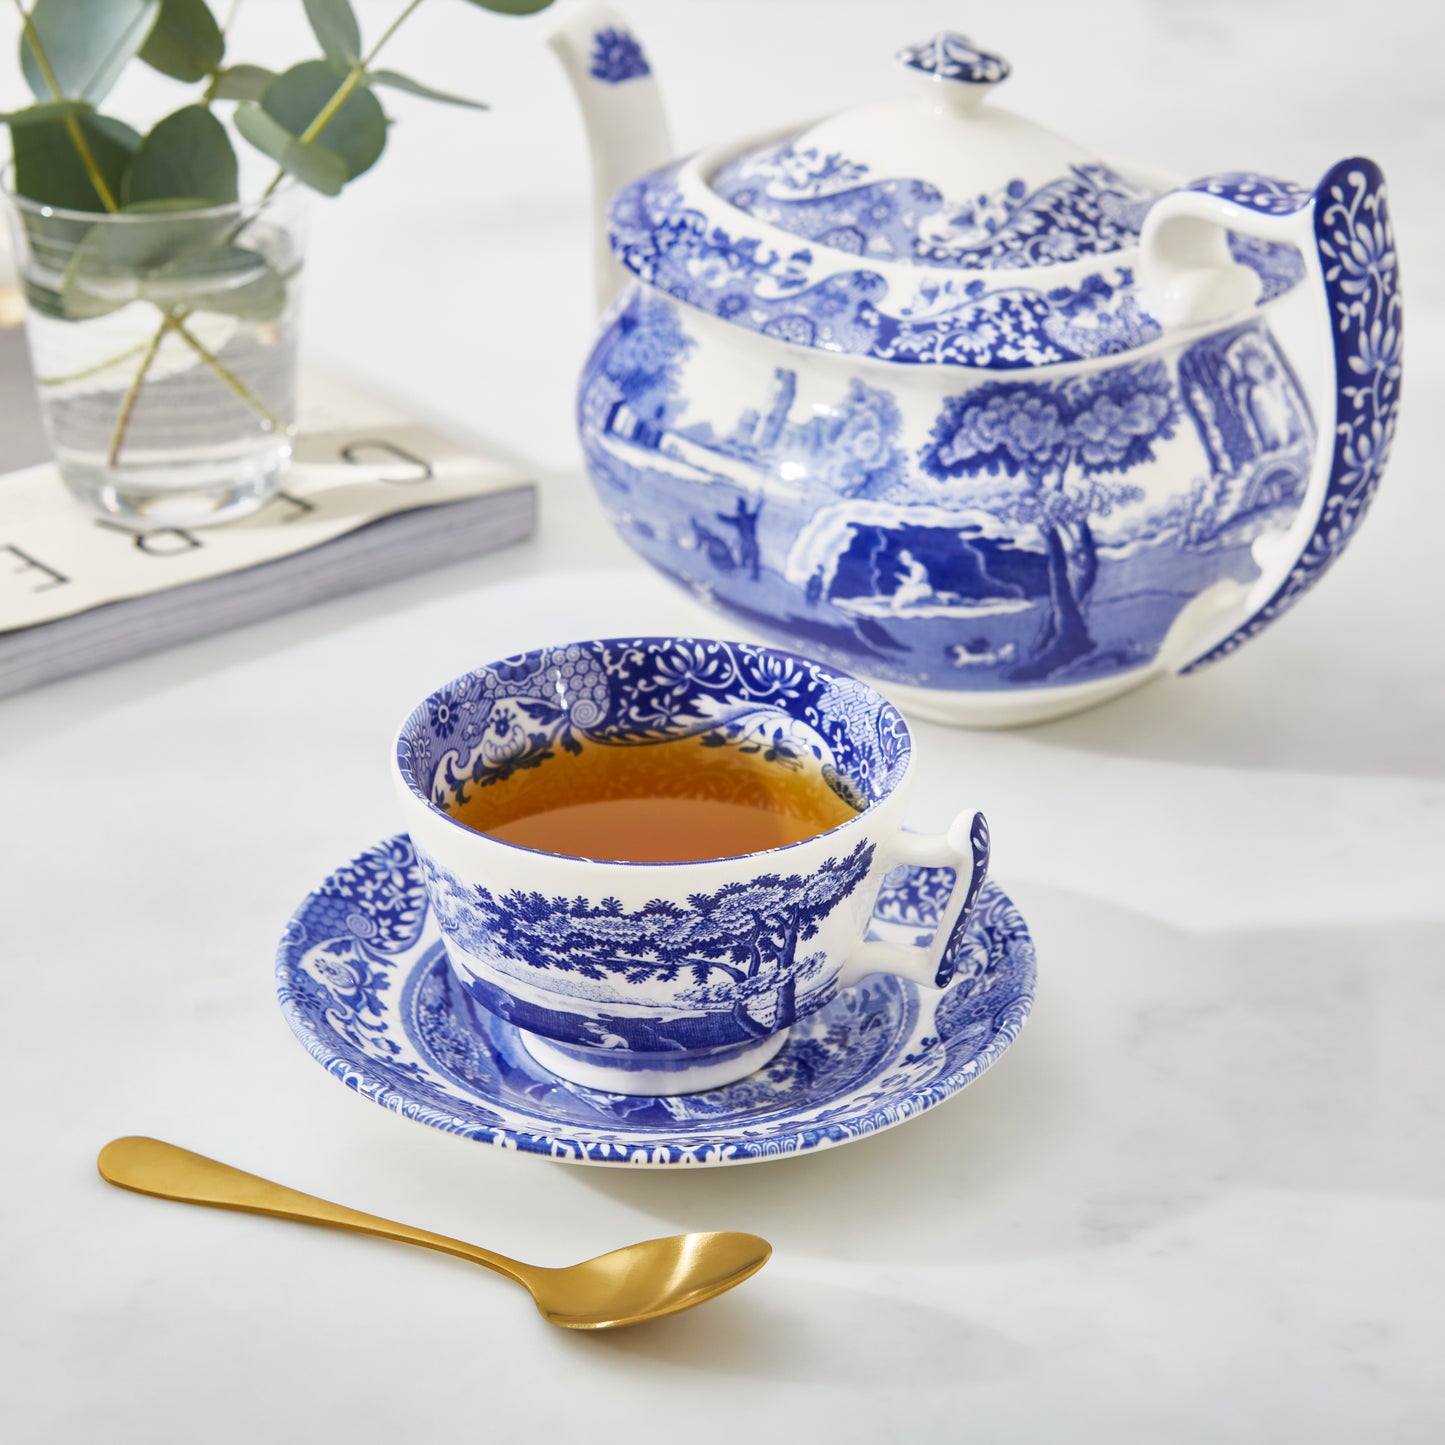 Spode Blue Italian Teacups and Saucers Set of 4